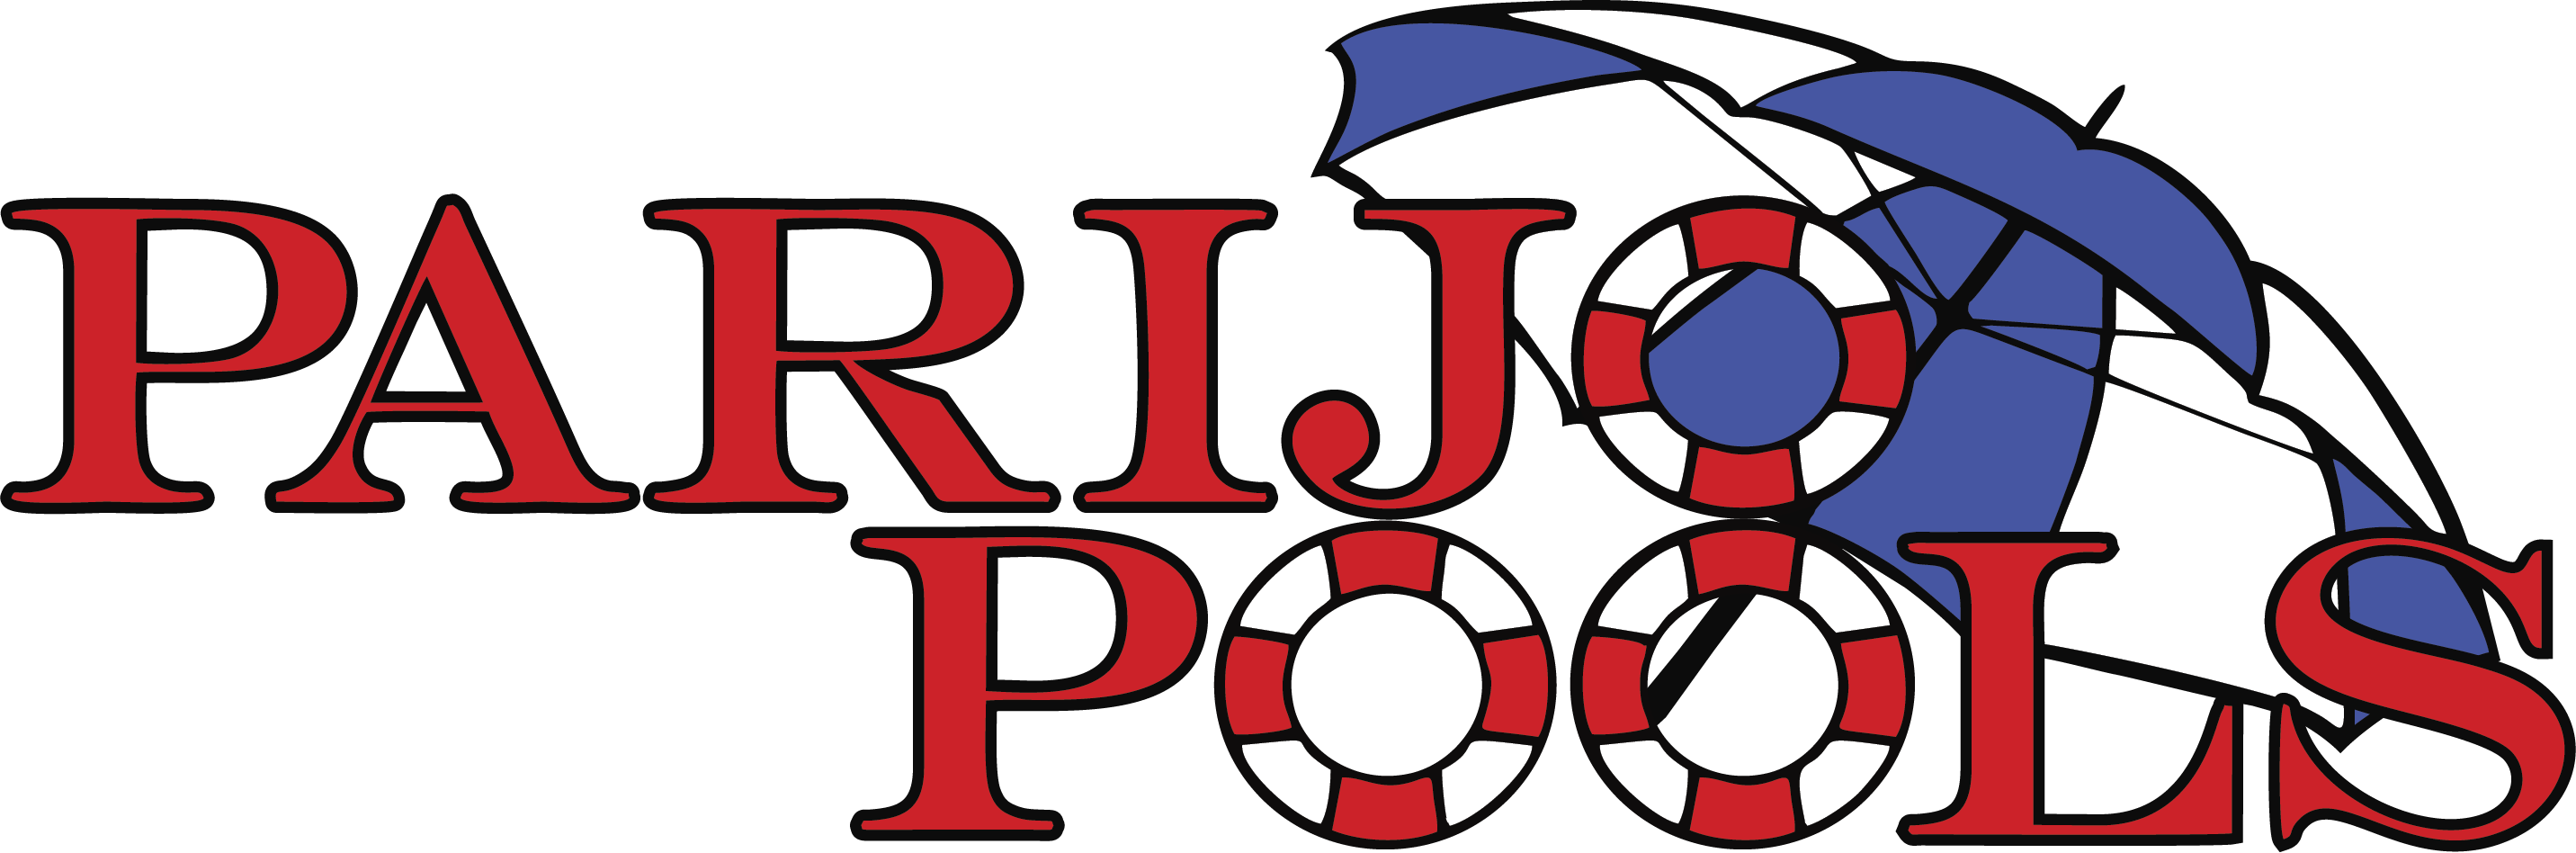 Parilo Pools logo